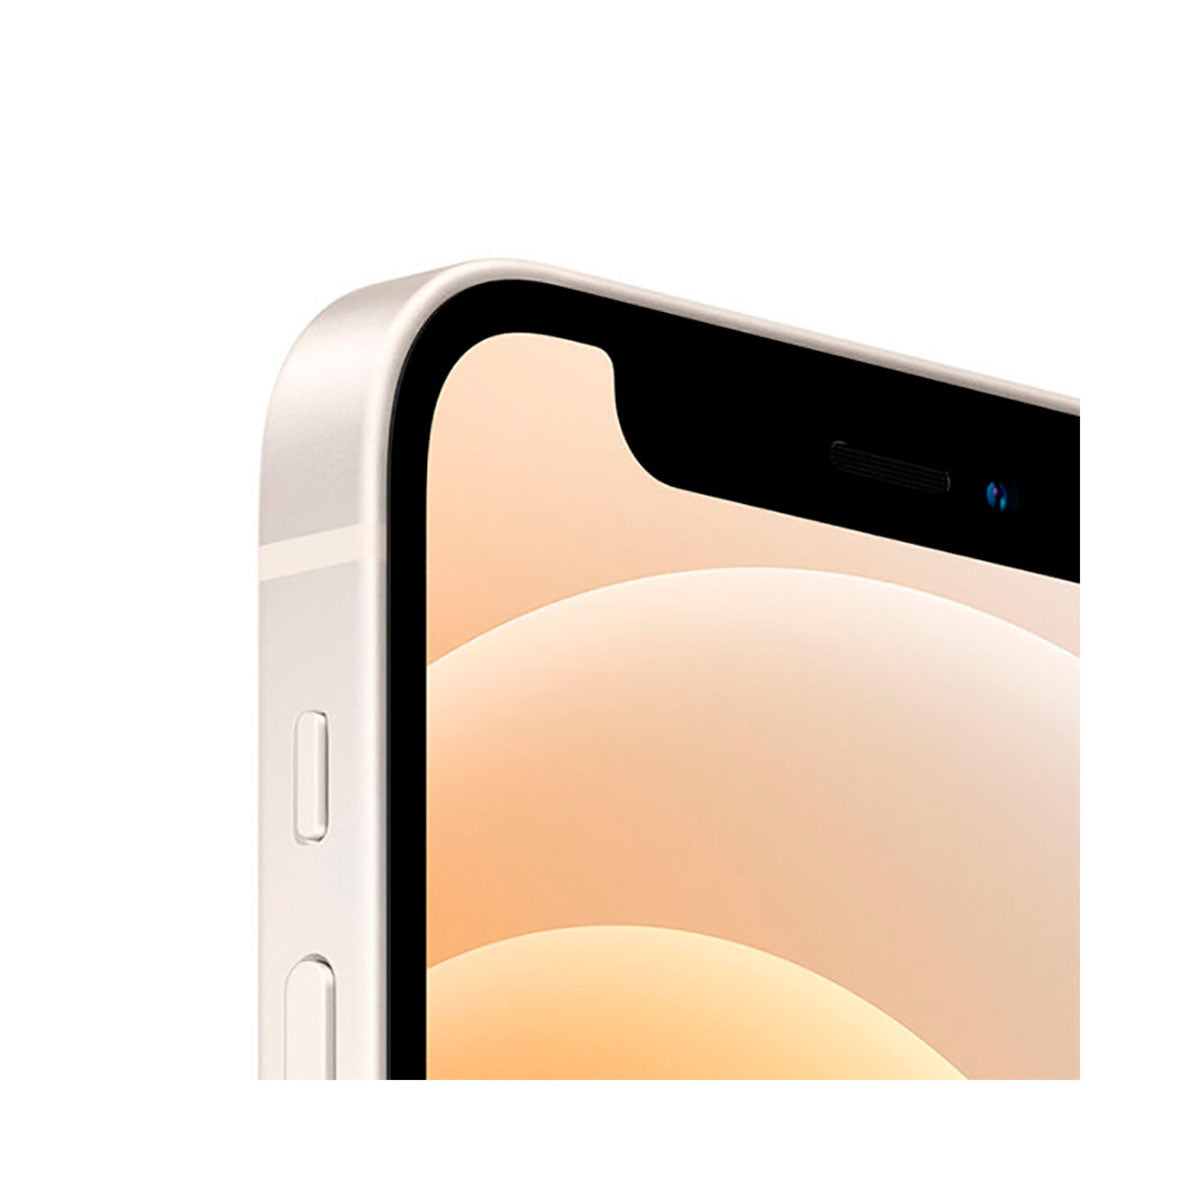 Apple iPhone 12 Mini 64 Go Blanc